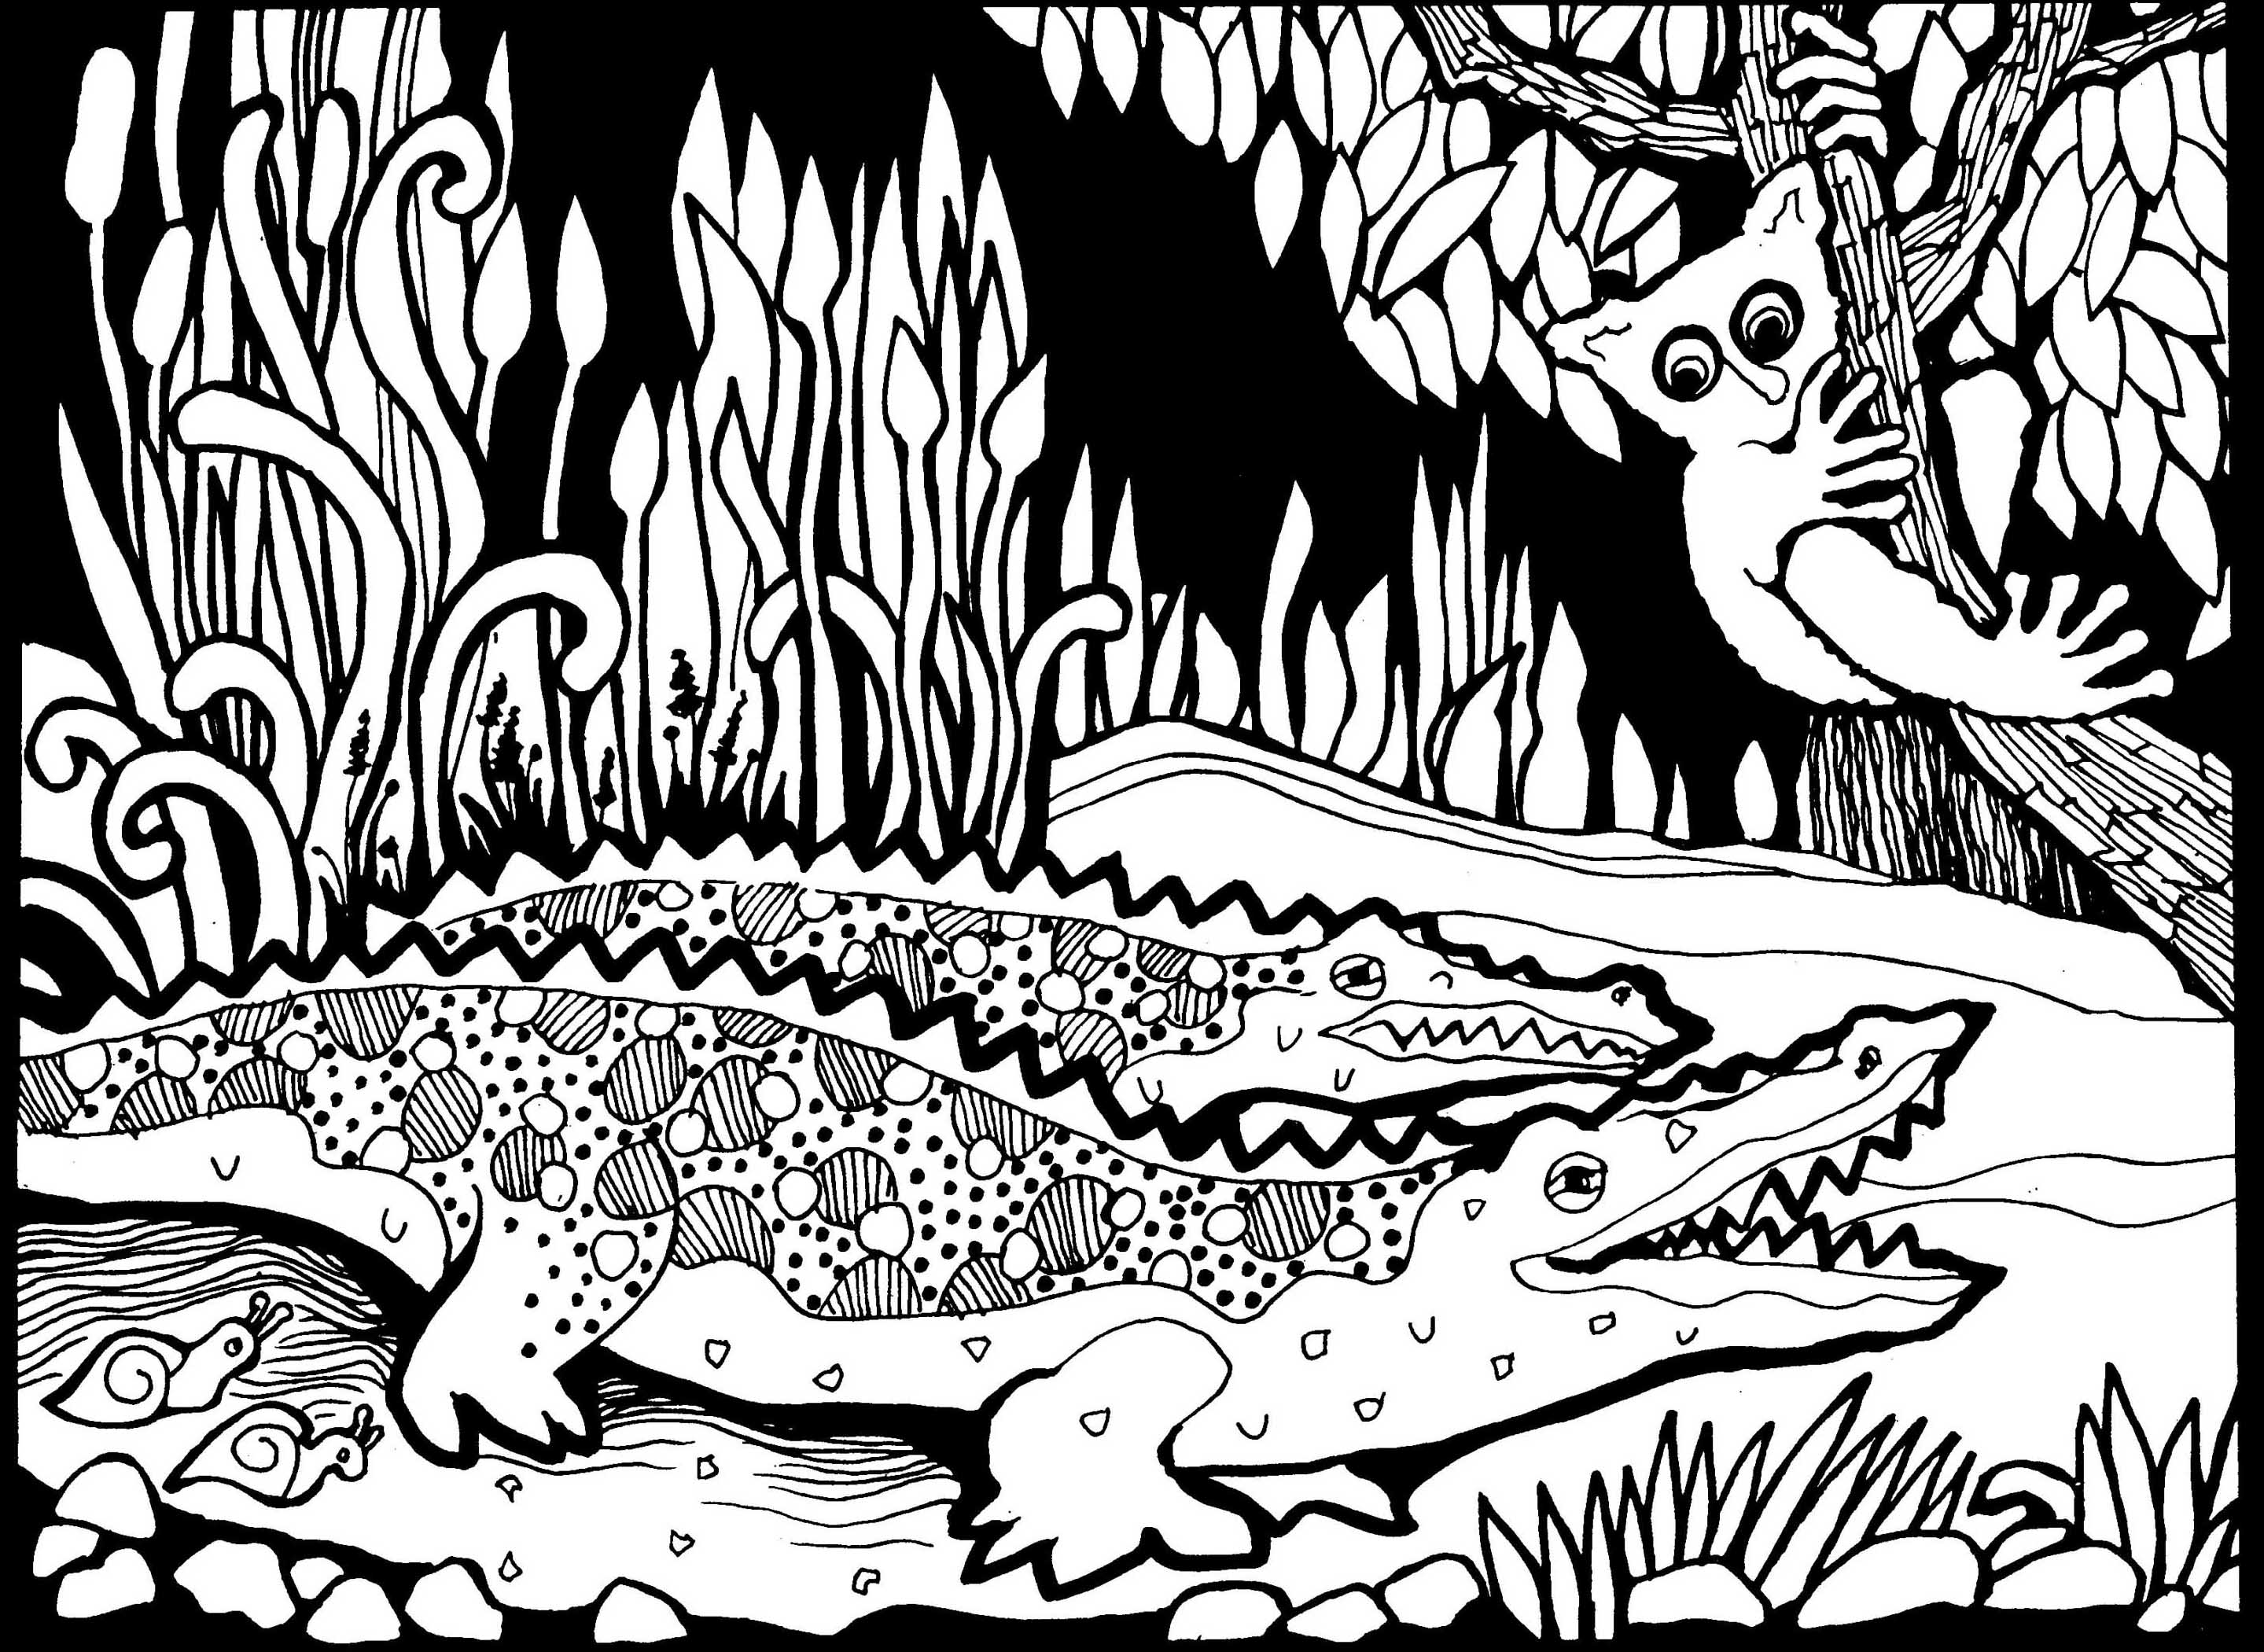 Coloring page of crocodiles